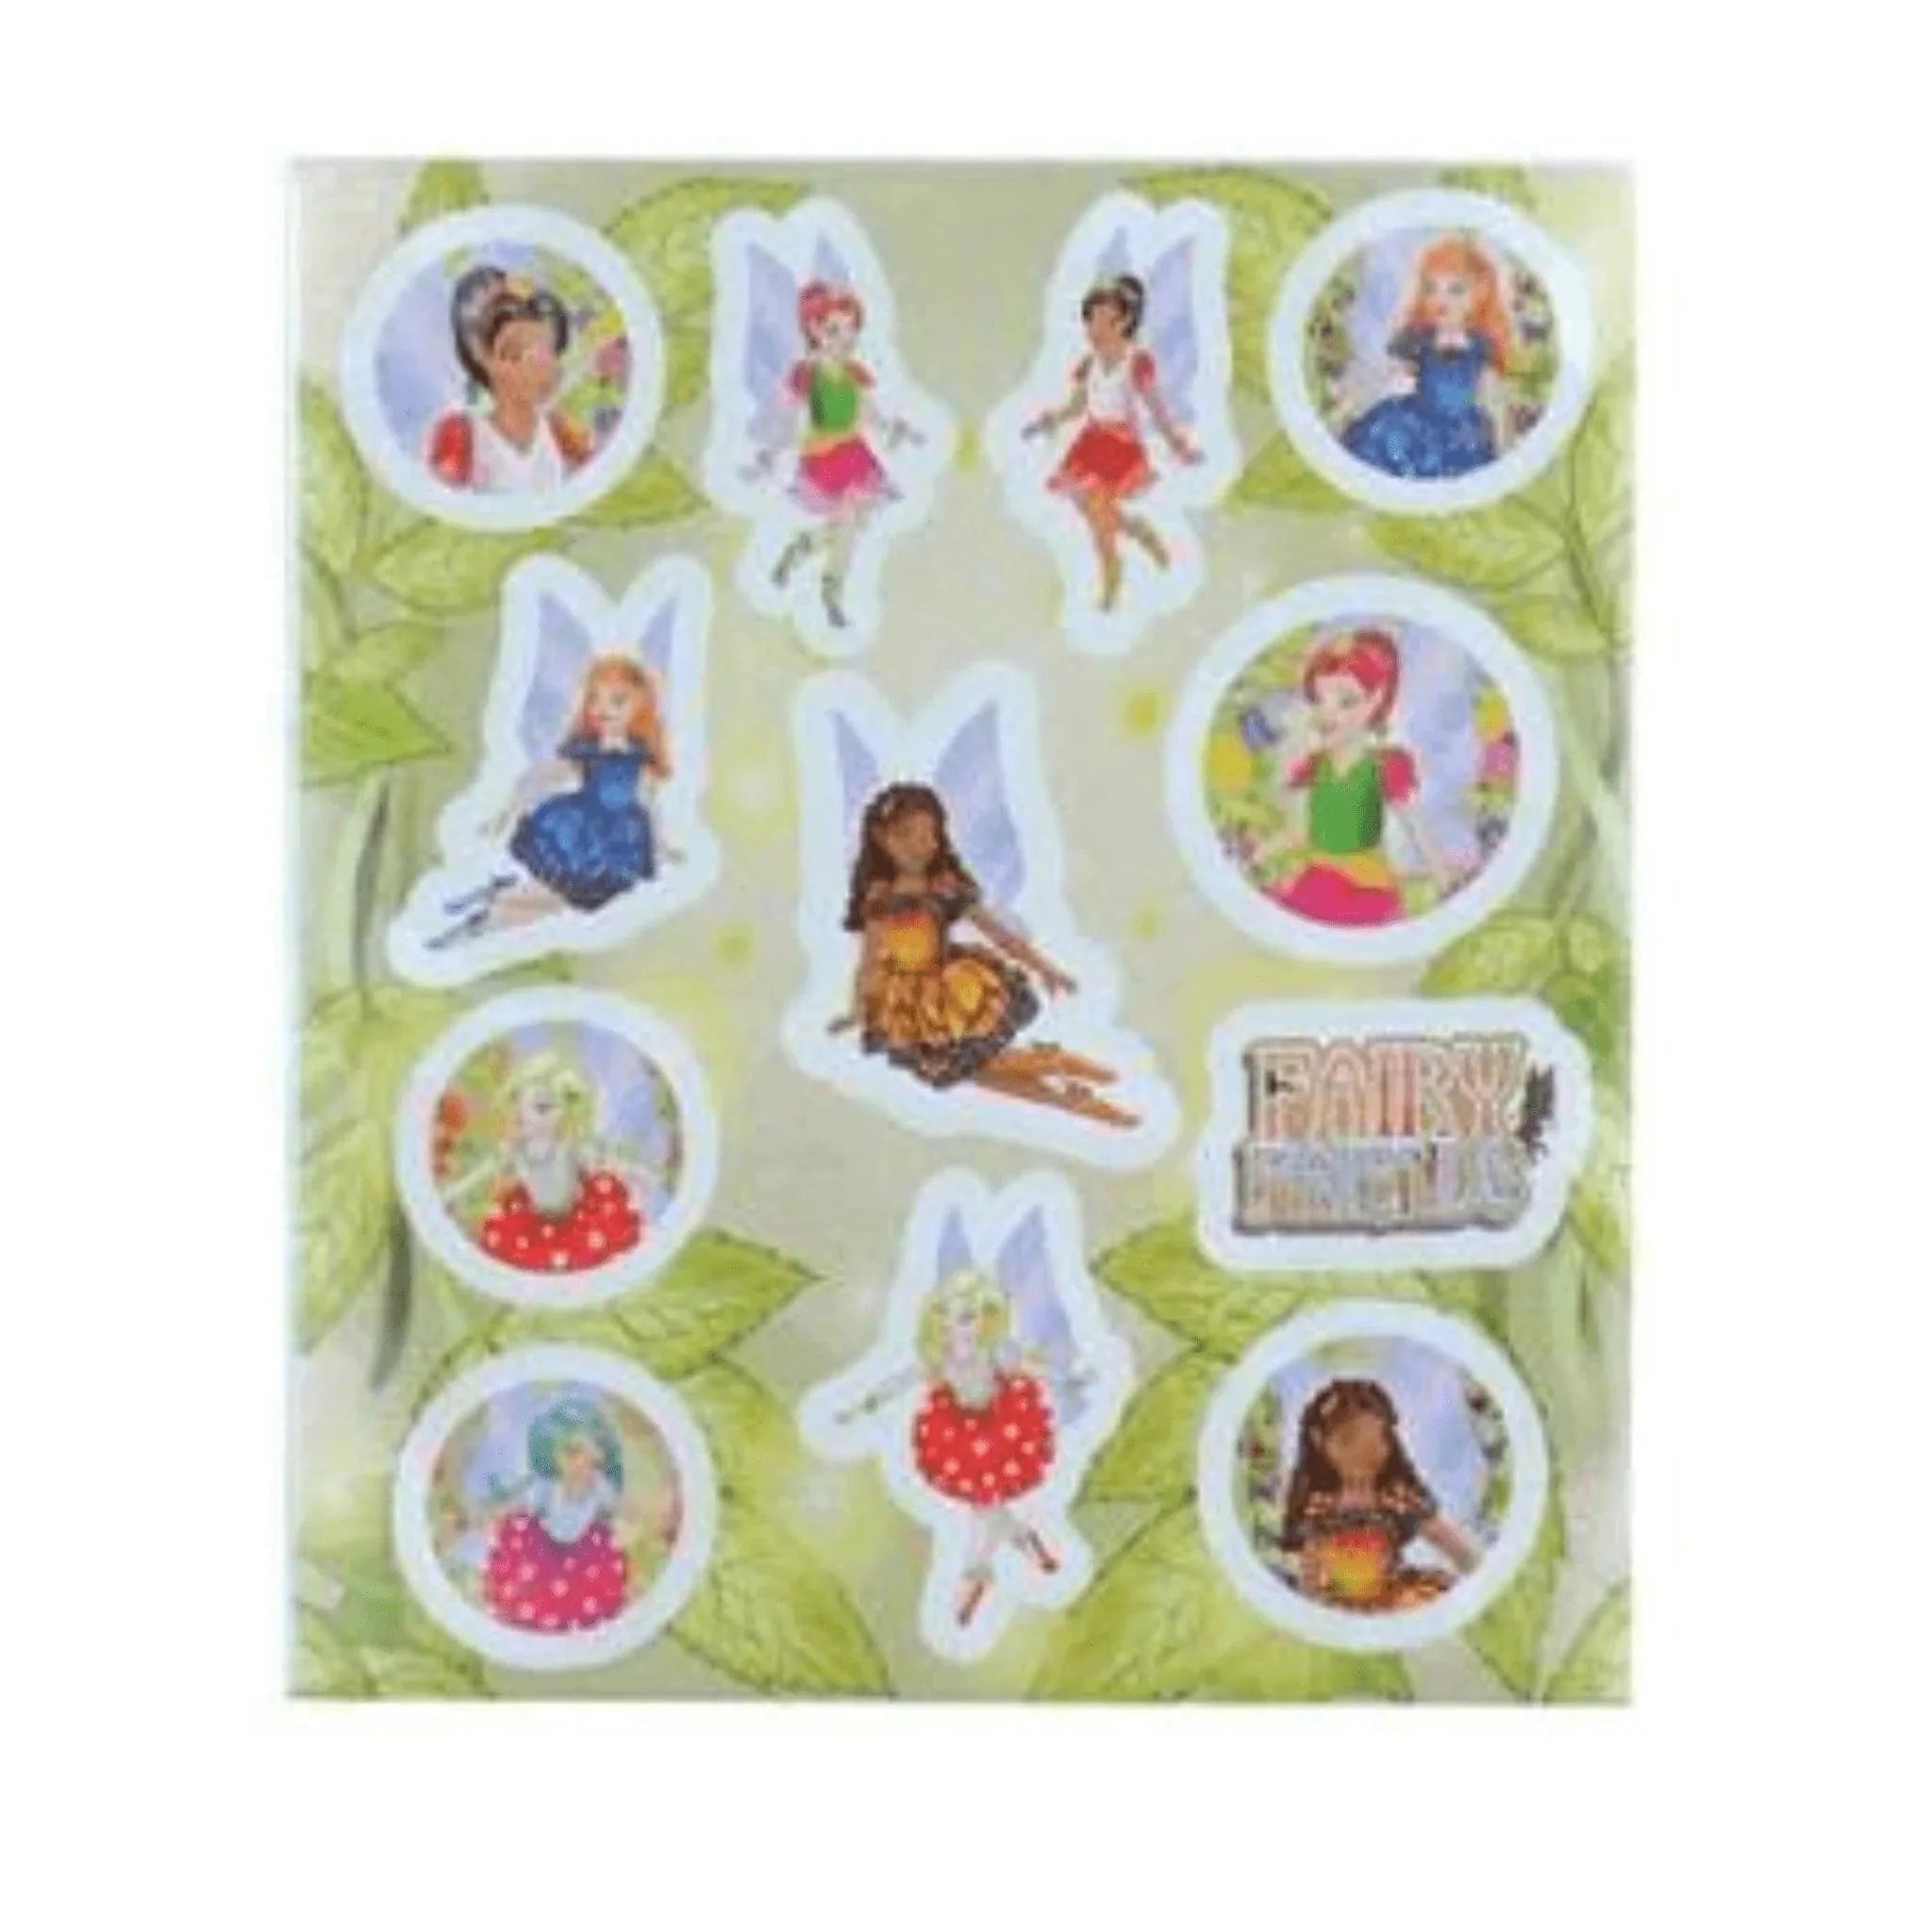 Fairy Sticker Sheet - Kids Party Craft